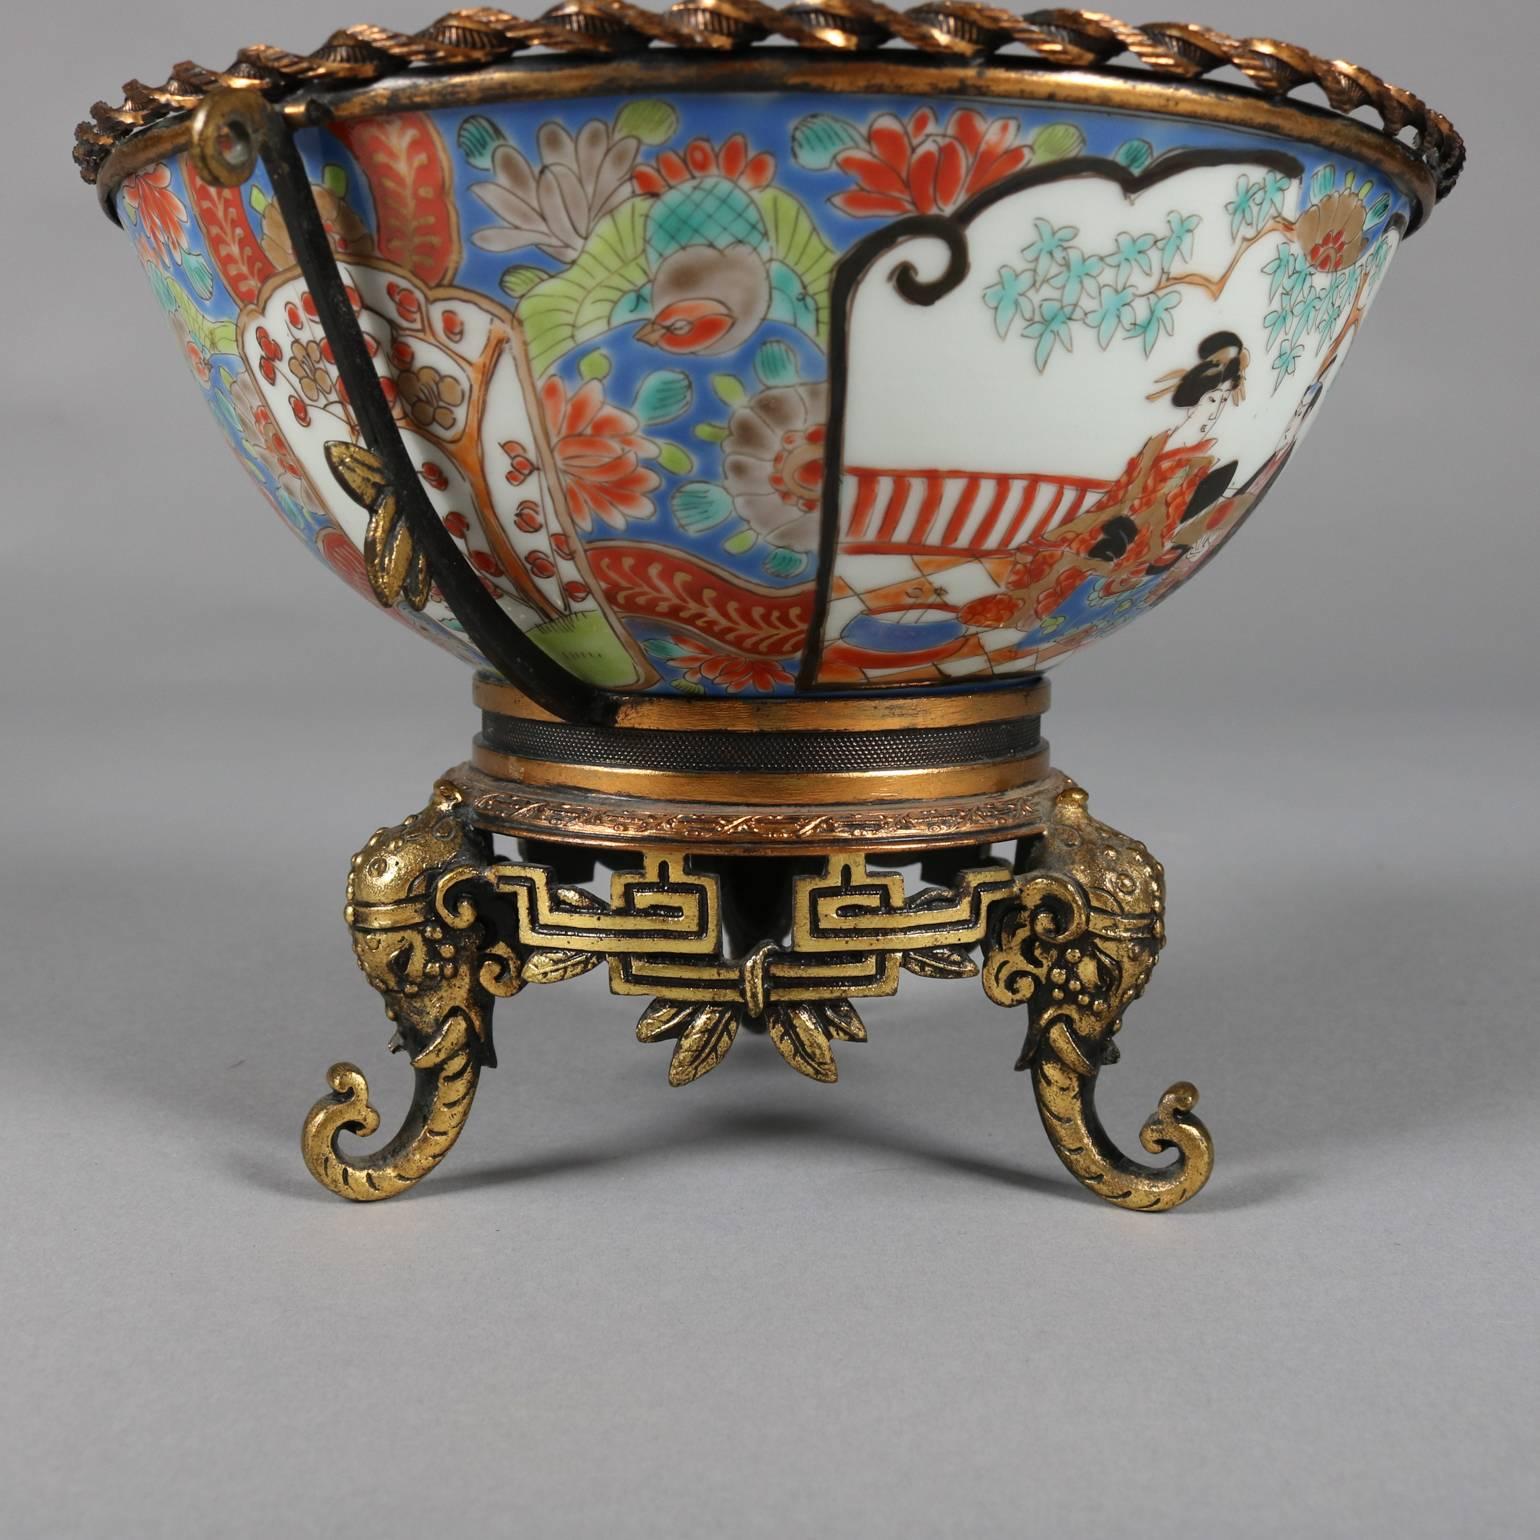 Metal Japanese Imari Porcelain and Figural Bronzed Bowl with Elephants, circa 1880